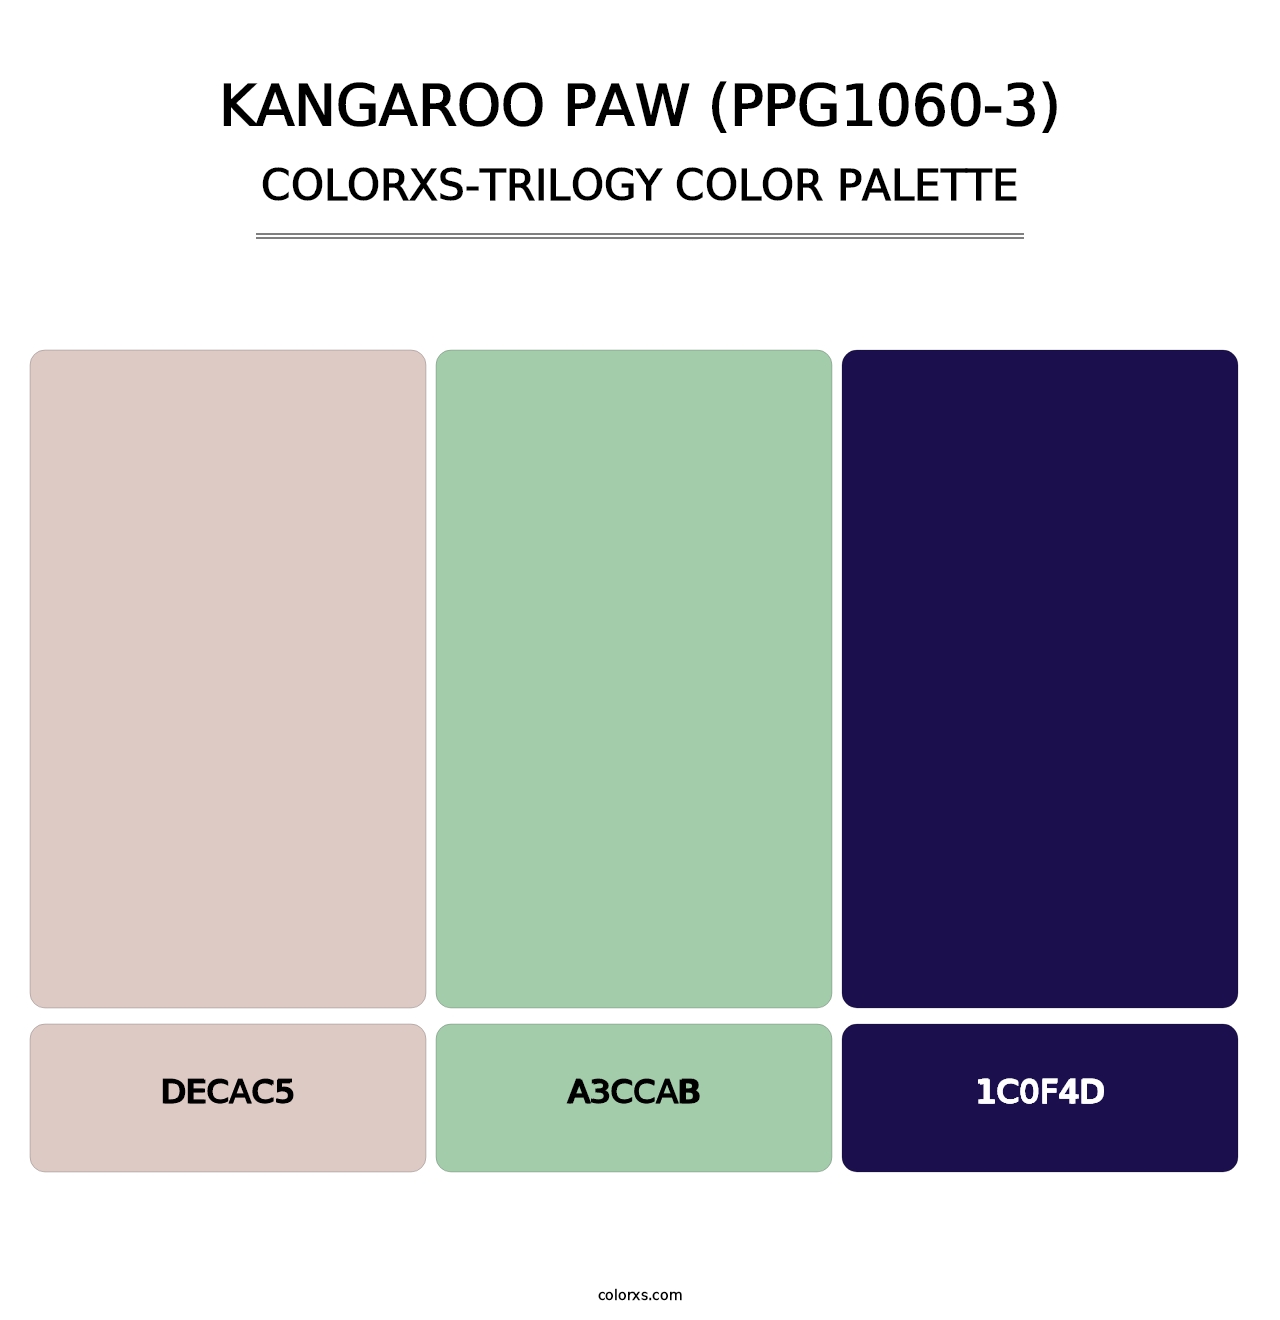 Kangaroo Paw (PPG1060-3) - Colorxs Trilogy Palette